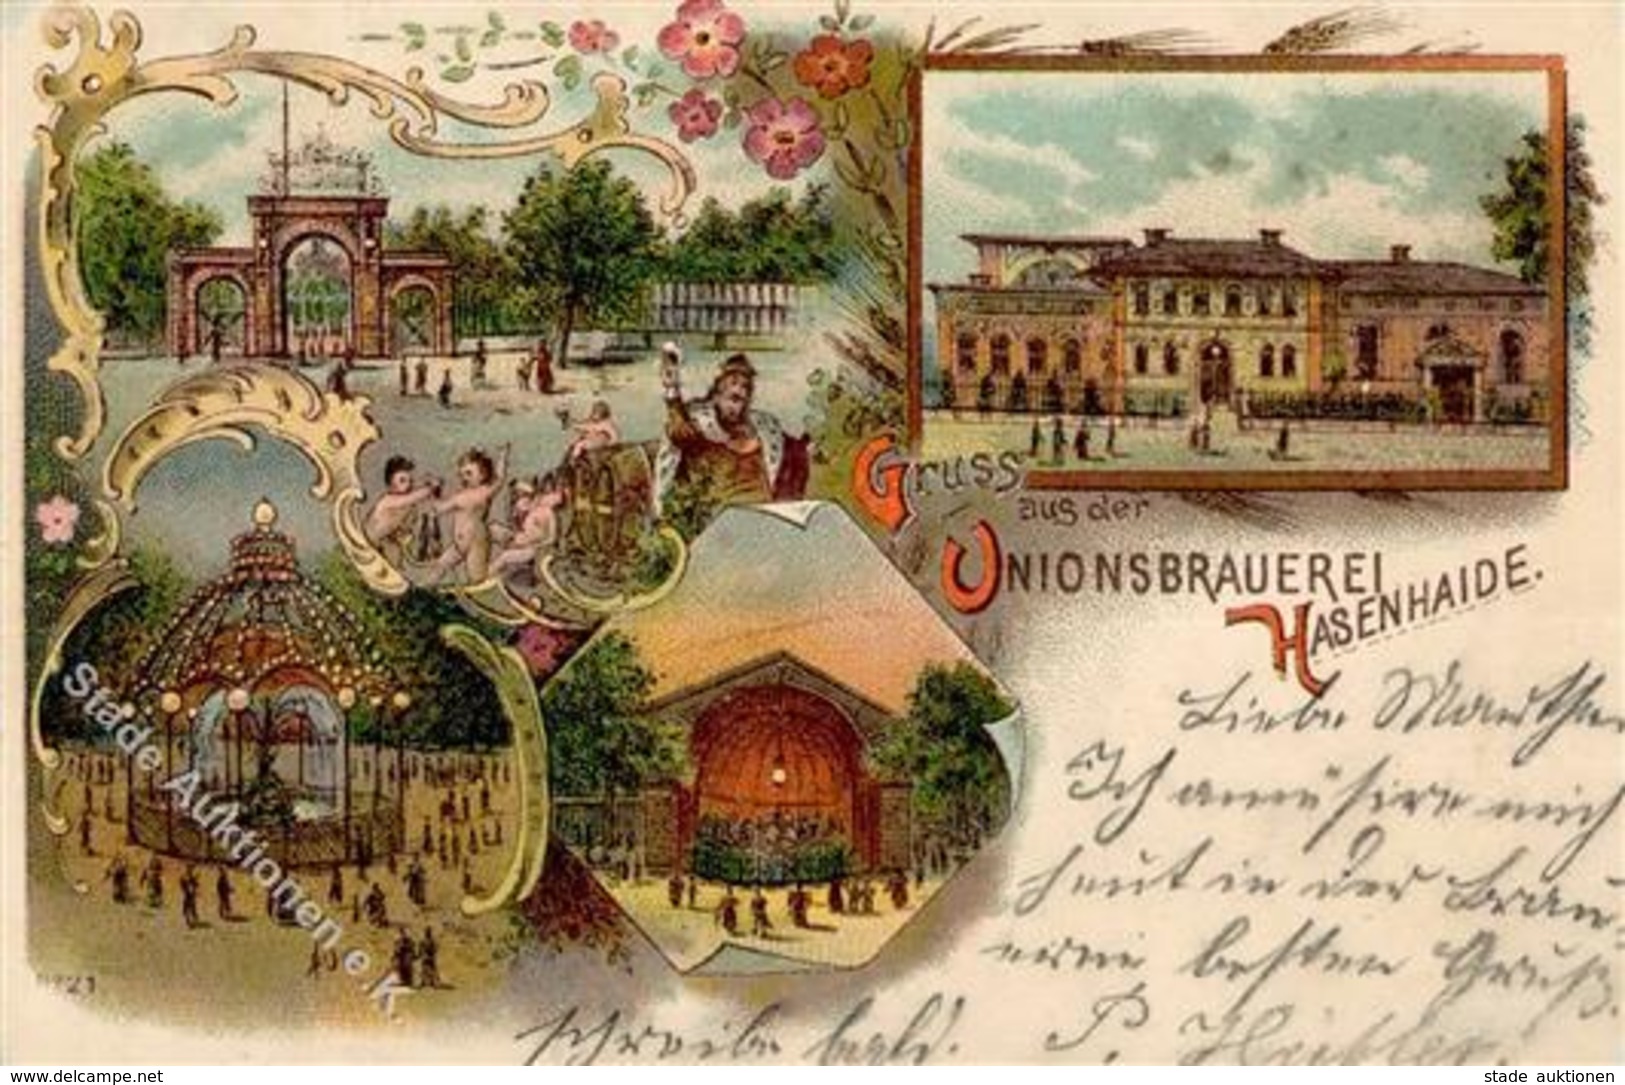 Rixdorf (1000) Brauerei Hasenhaide Lithographie 1901 I-II - Kamerun